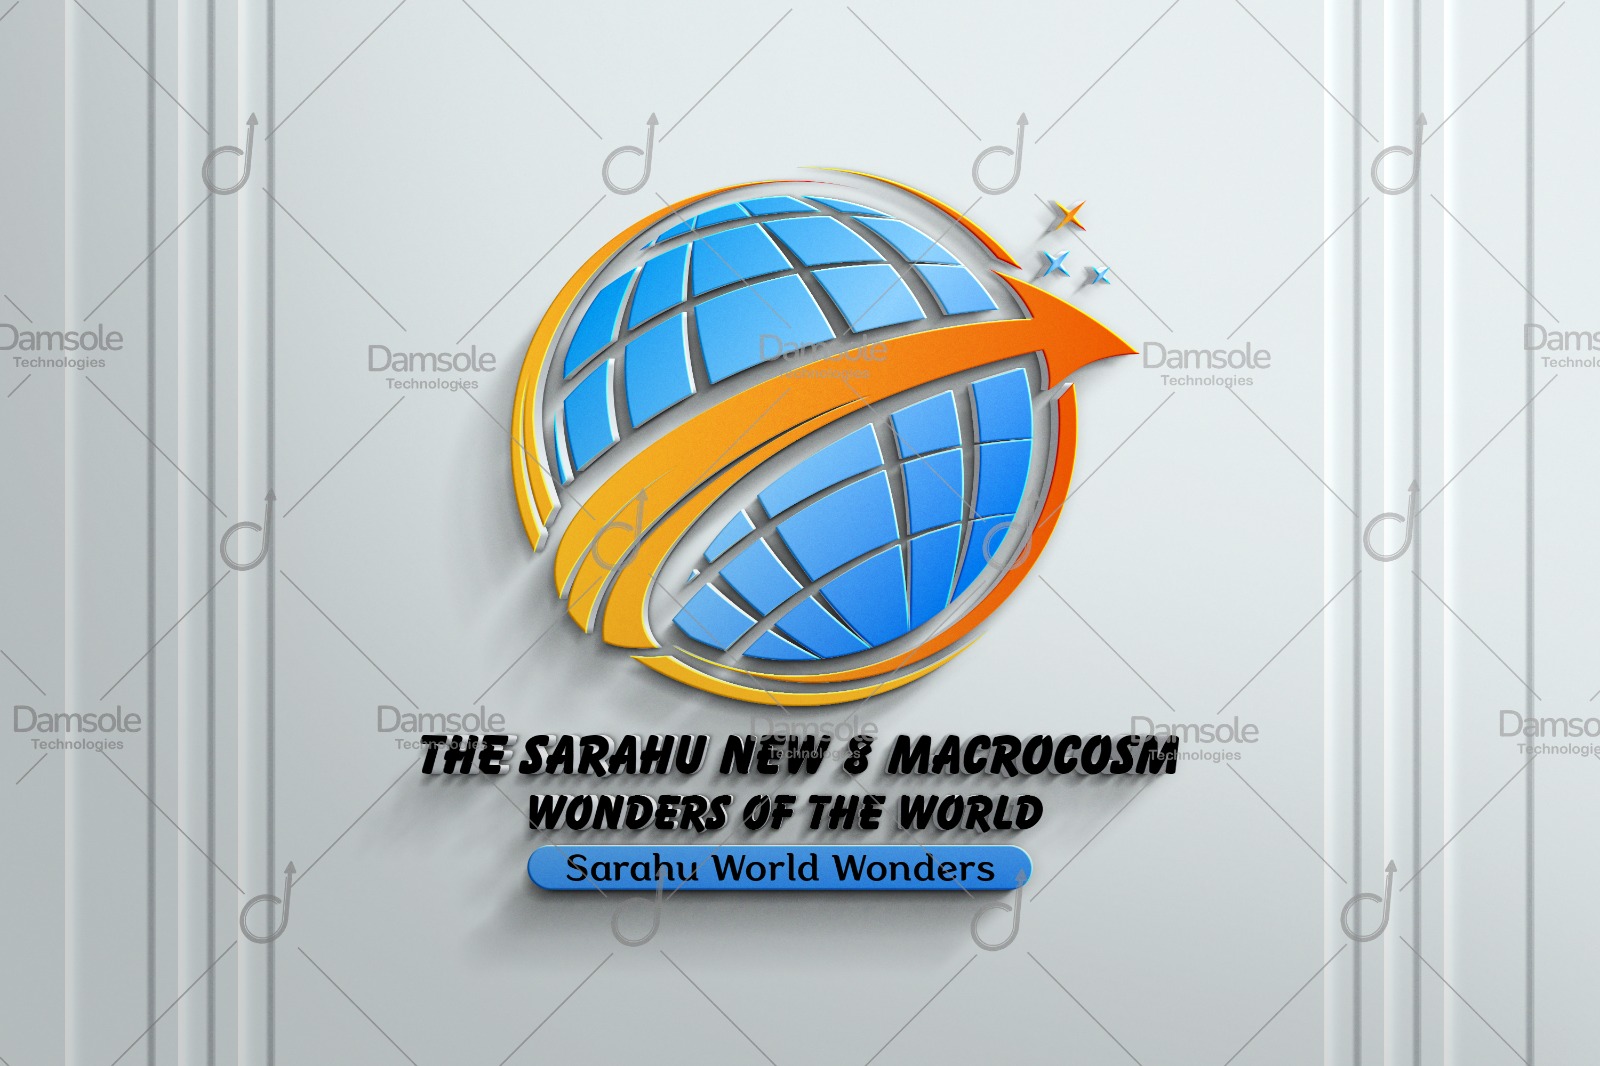 The Sarahu New 8 Macrocosm Wonders of the World